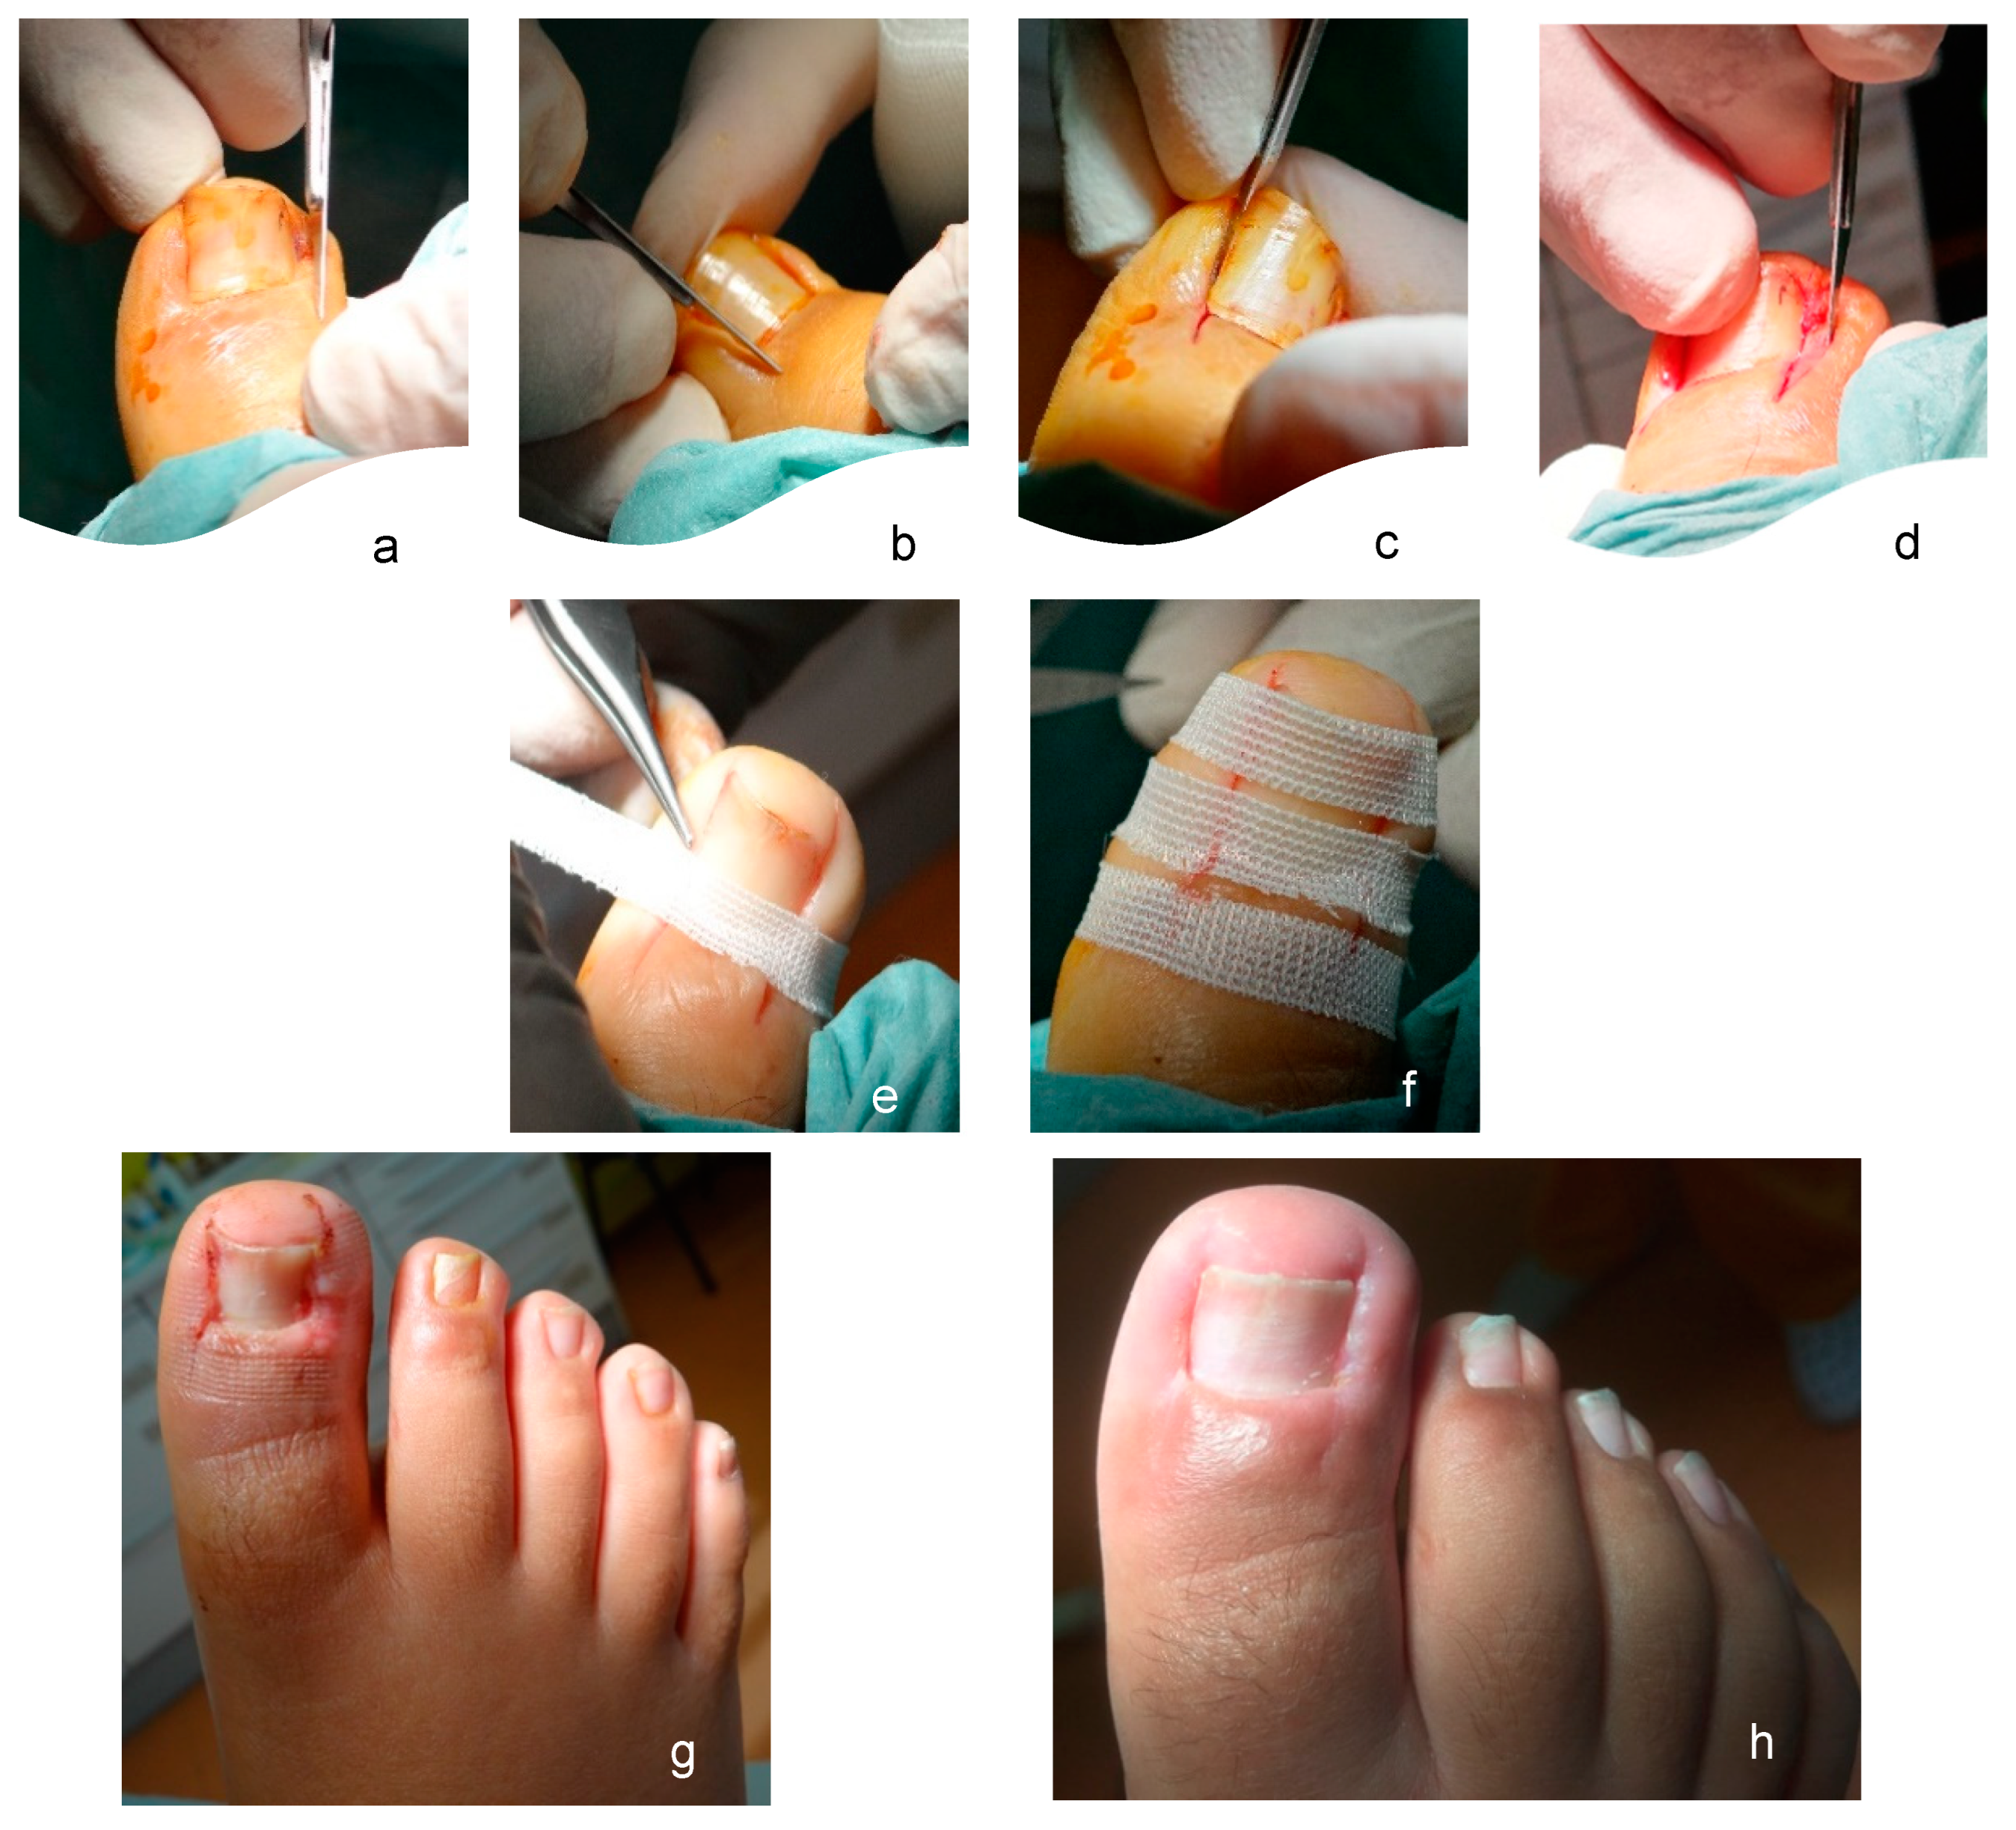 Surgery for ingrowing toenail (adult) | healthdirect